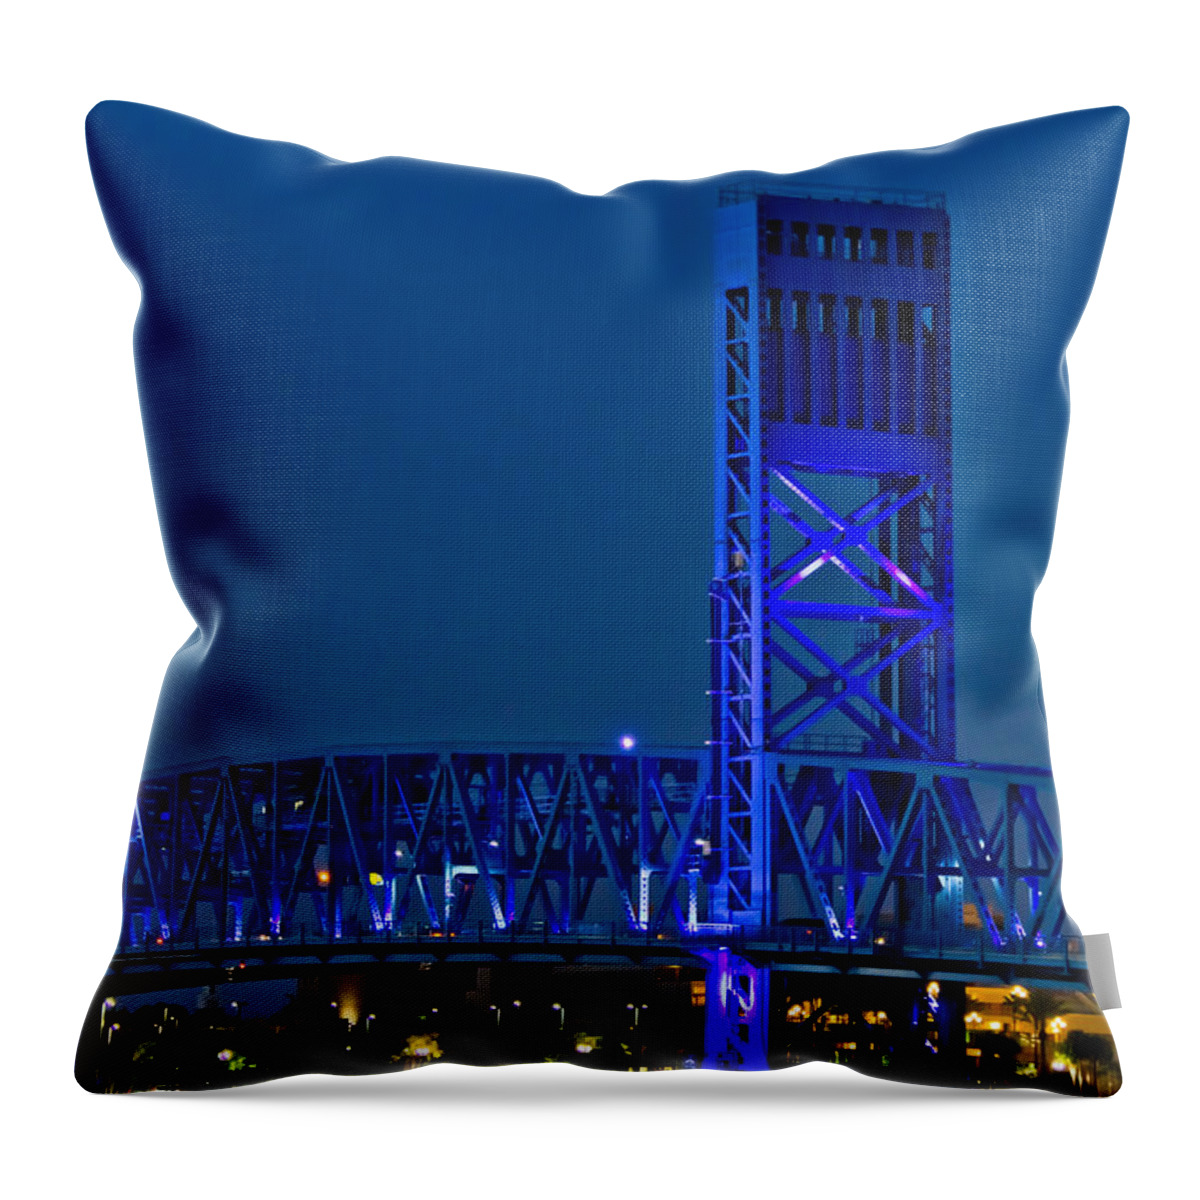 Florida Throw Pillow featuring the photograph Main Street Bridge Jacksonville by Debra and Dave Vanderlaan